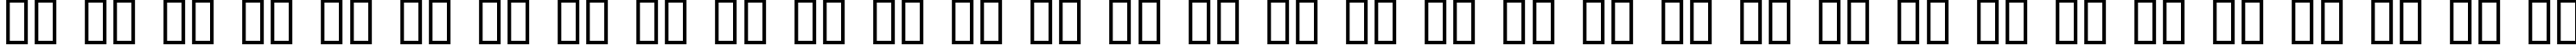 Пример написания русского алфавита шрифтом DreadLox